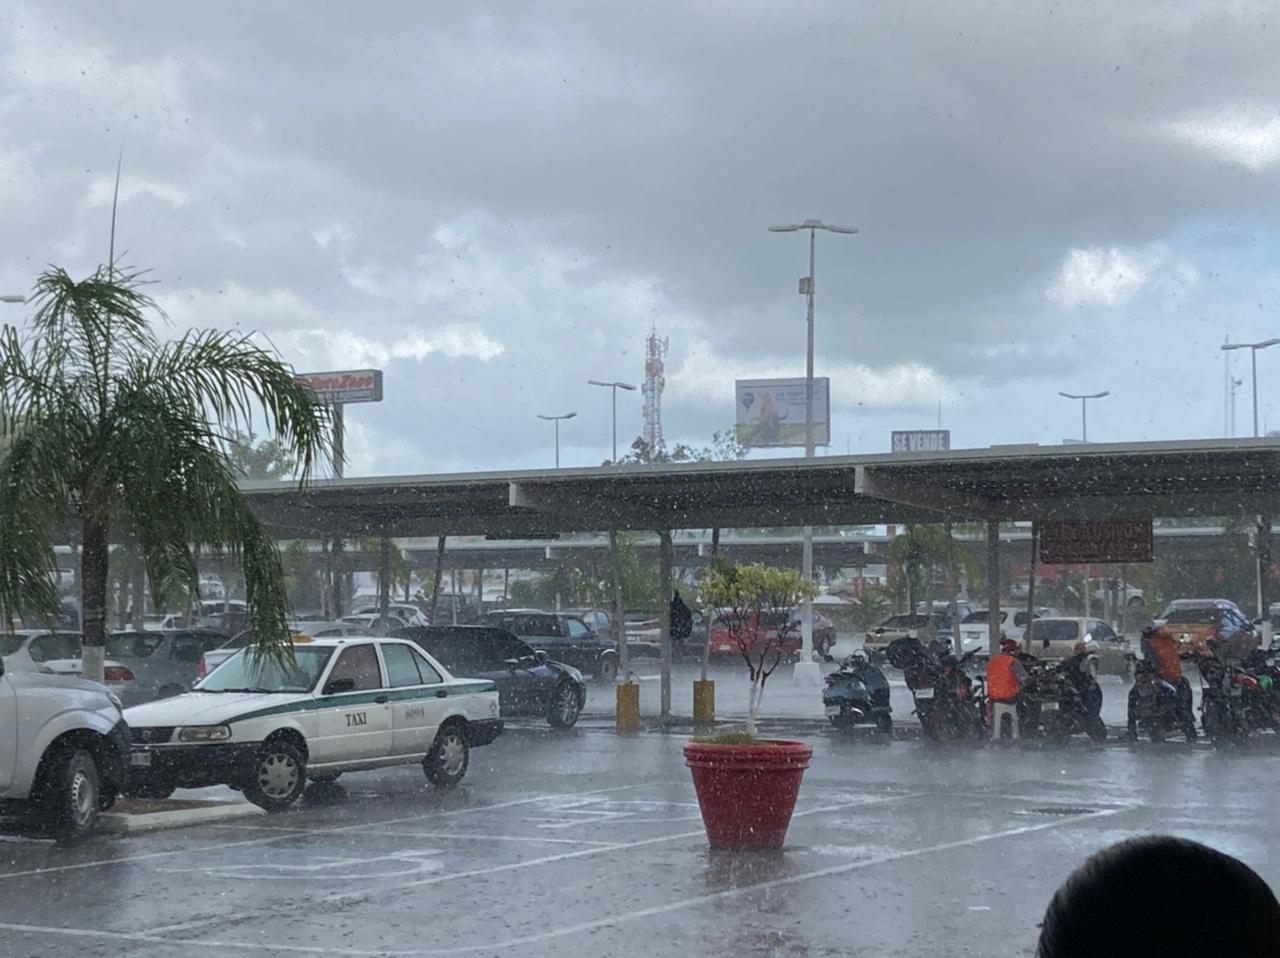 Clima en Quintana Roo 29 de febrero: Se espera un clima agradable con cielos parcialmente nublados